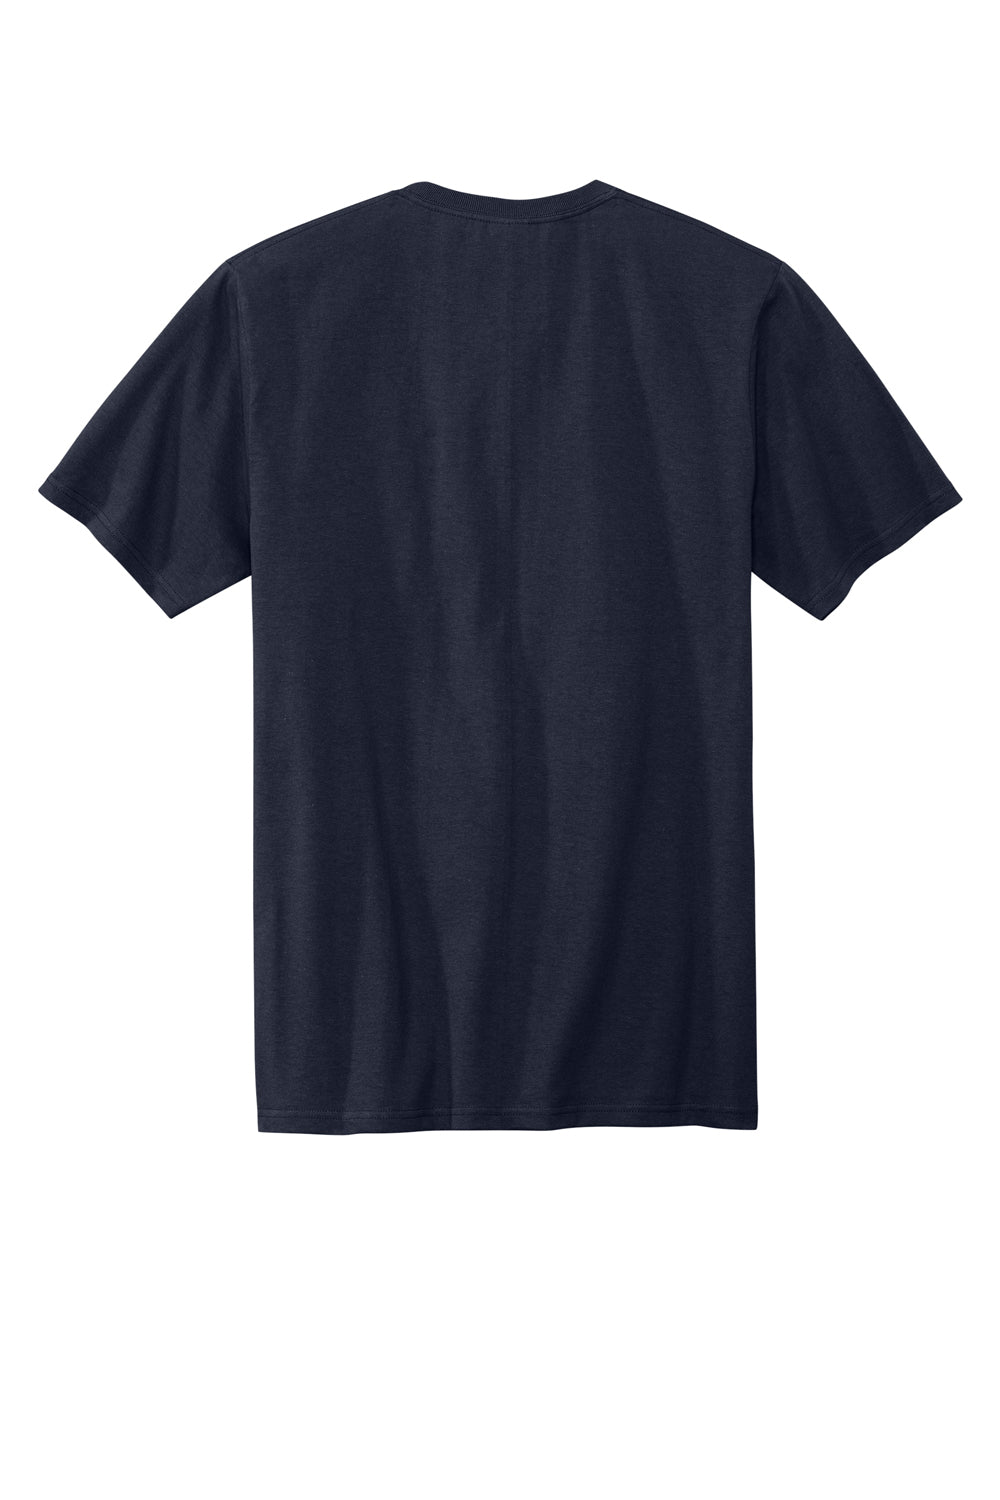 Volunteer Knitwear VL100 USA Made All American Short Sleeve Crewneck T-Shirts Strong Navy Blue Flat Back